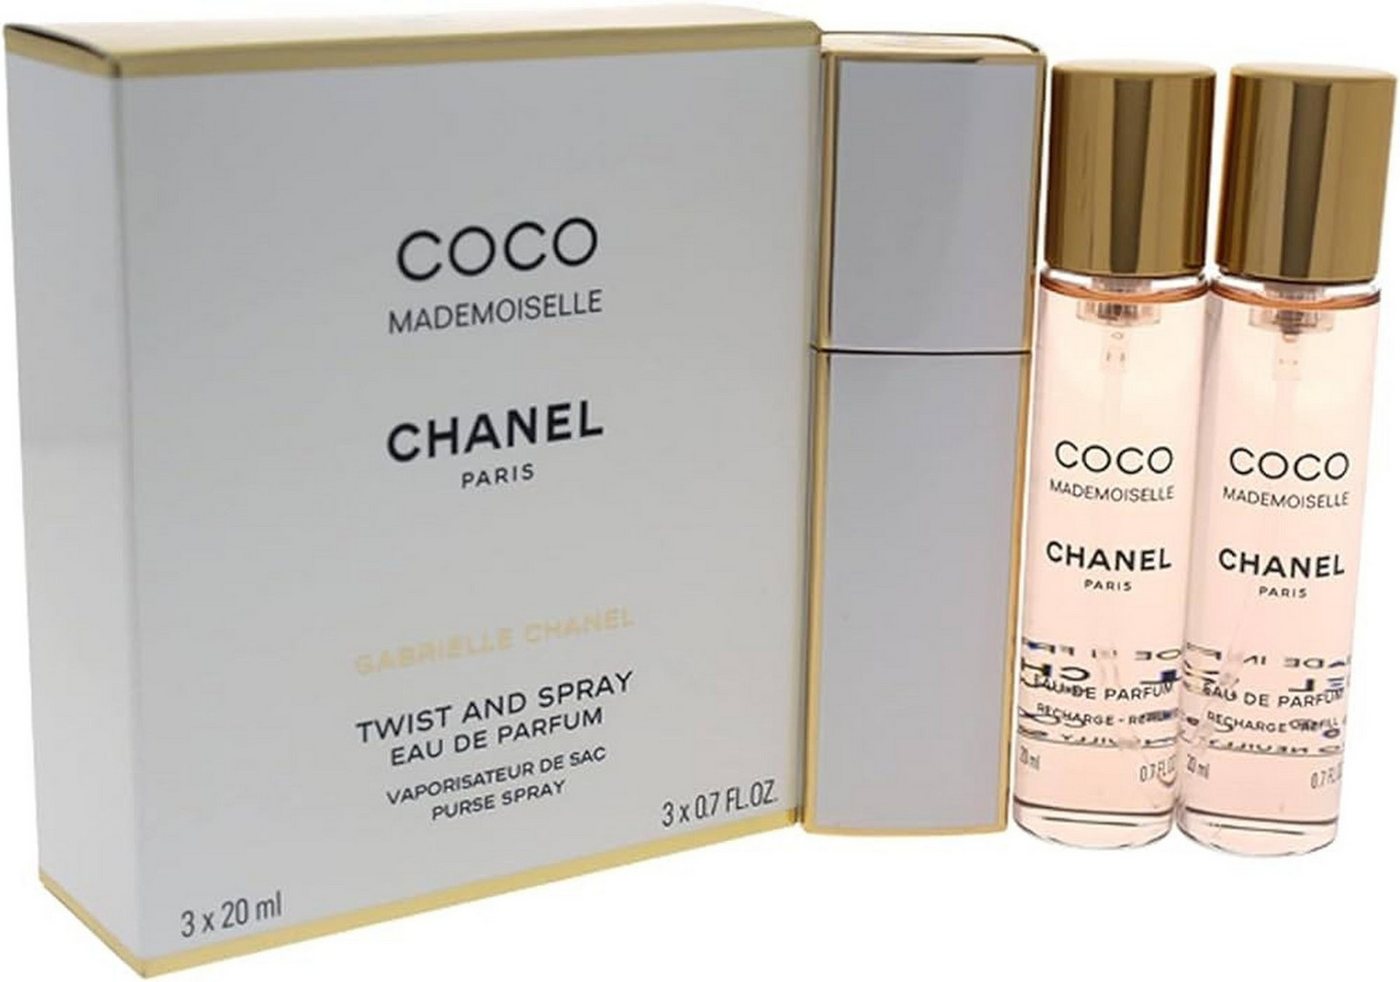 CHANEL Eau de Parfum CHANEL COCO MADEMOISELLE EAU DE PARFUM TWIST AND SPRAY von CHANEL